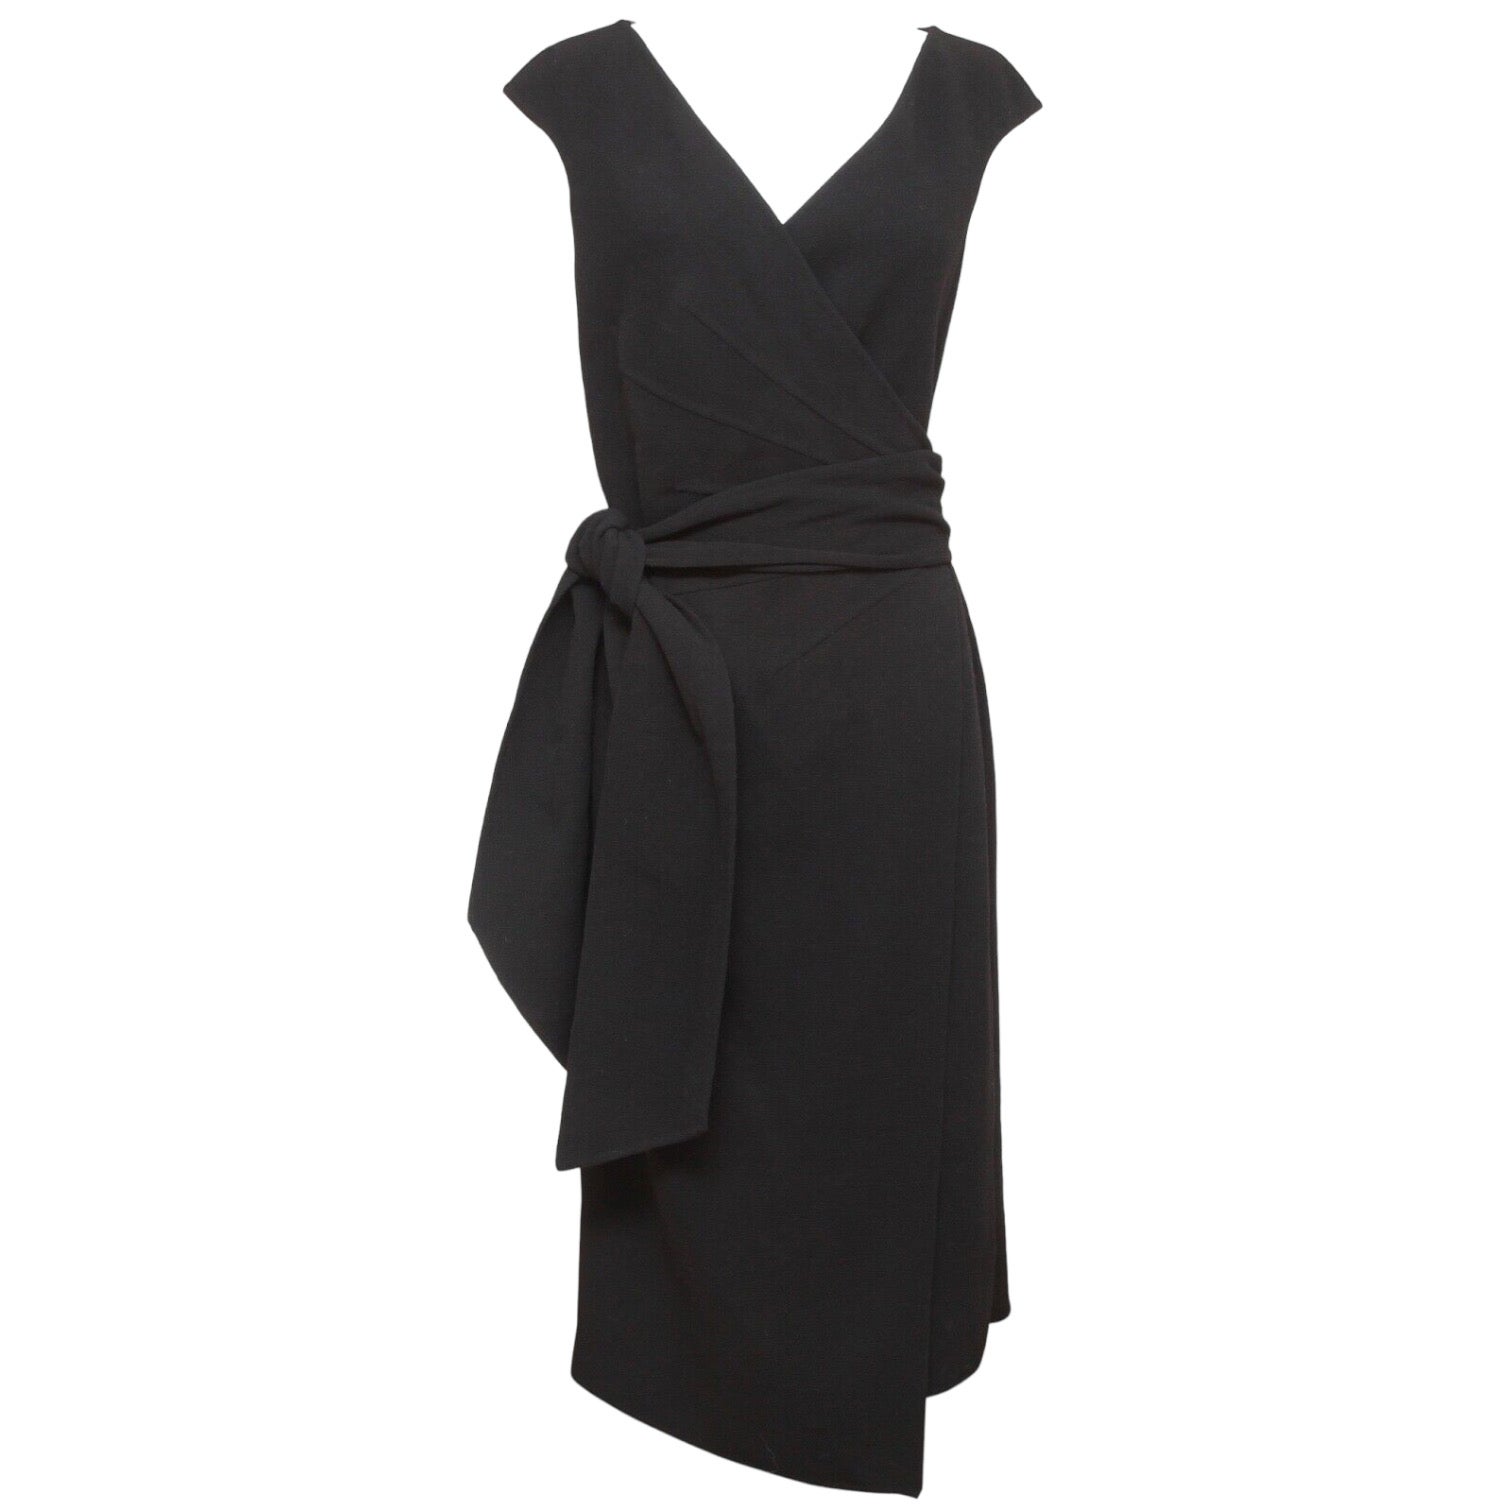 OSCAR DE LA RENTA Dress Black Sleeveless Wrap Knit Sz 8 NWT $2190 For Sale